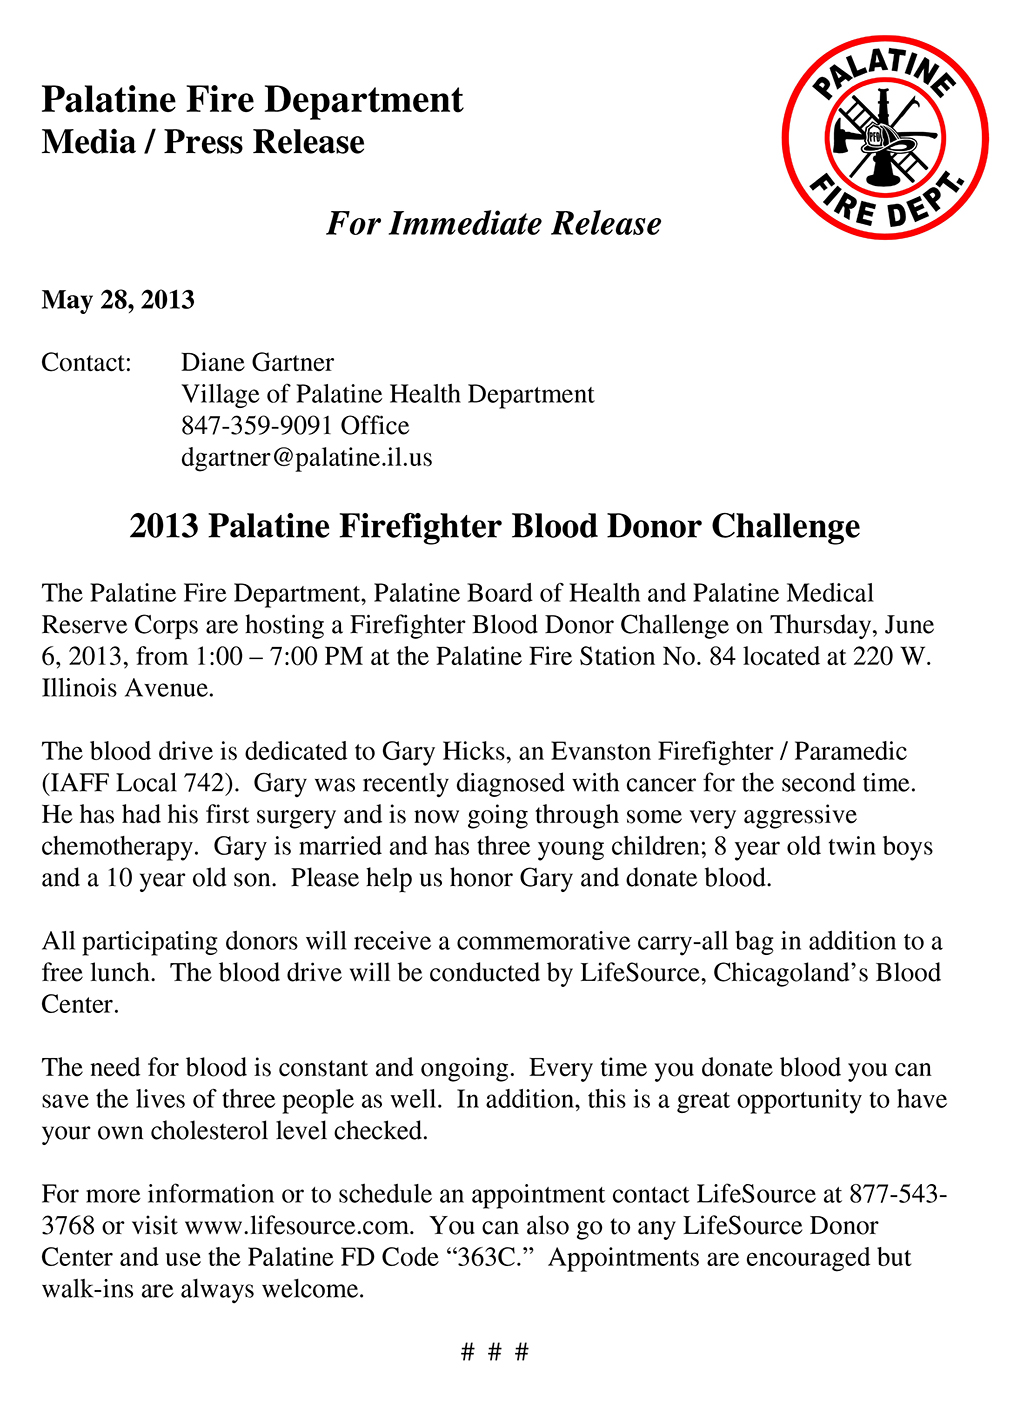 Palatine Fire Department blood drive